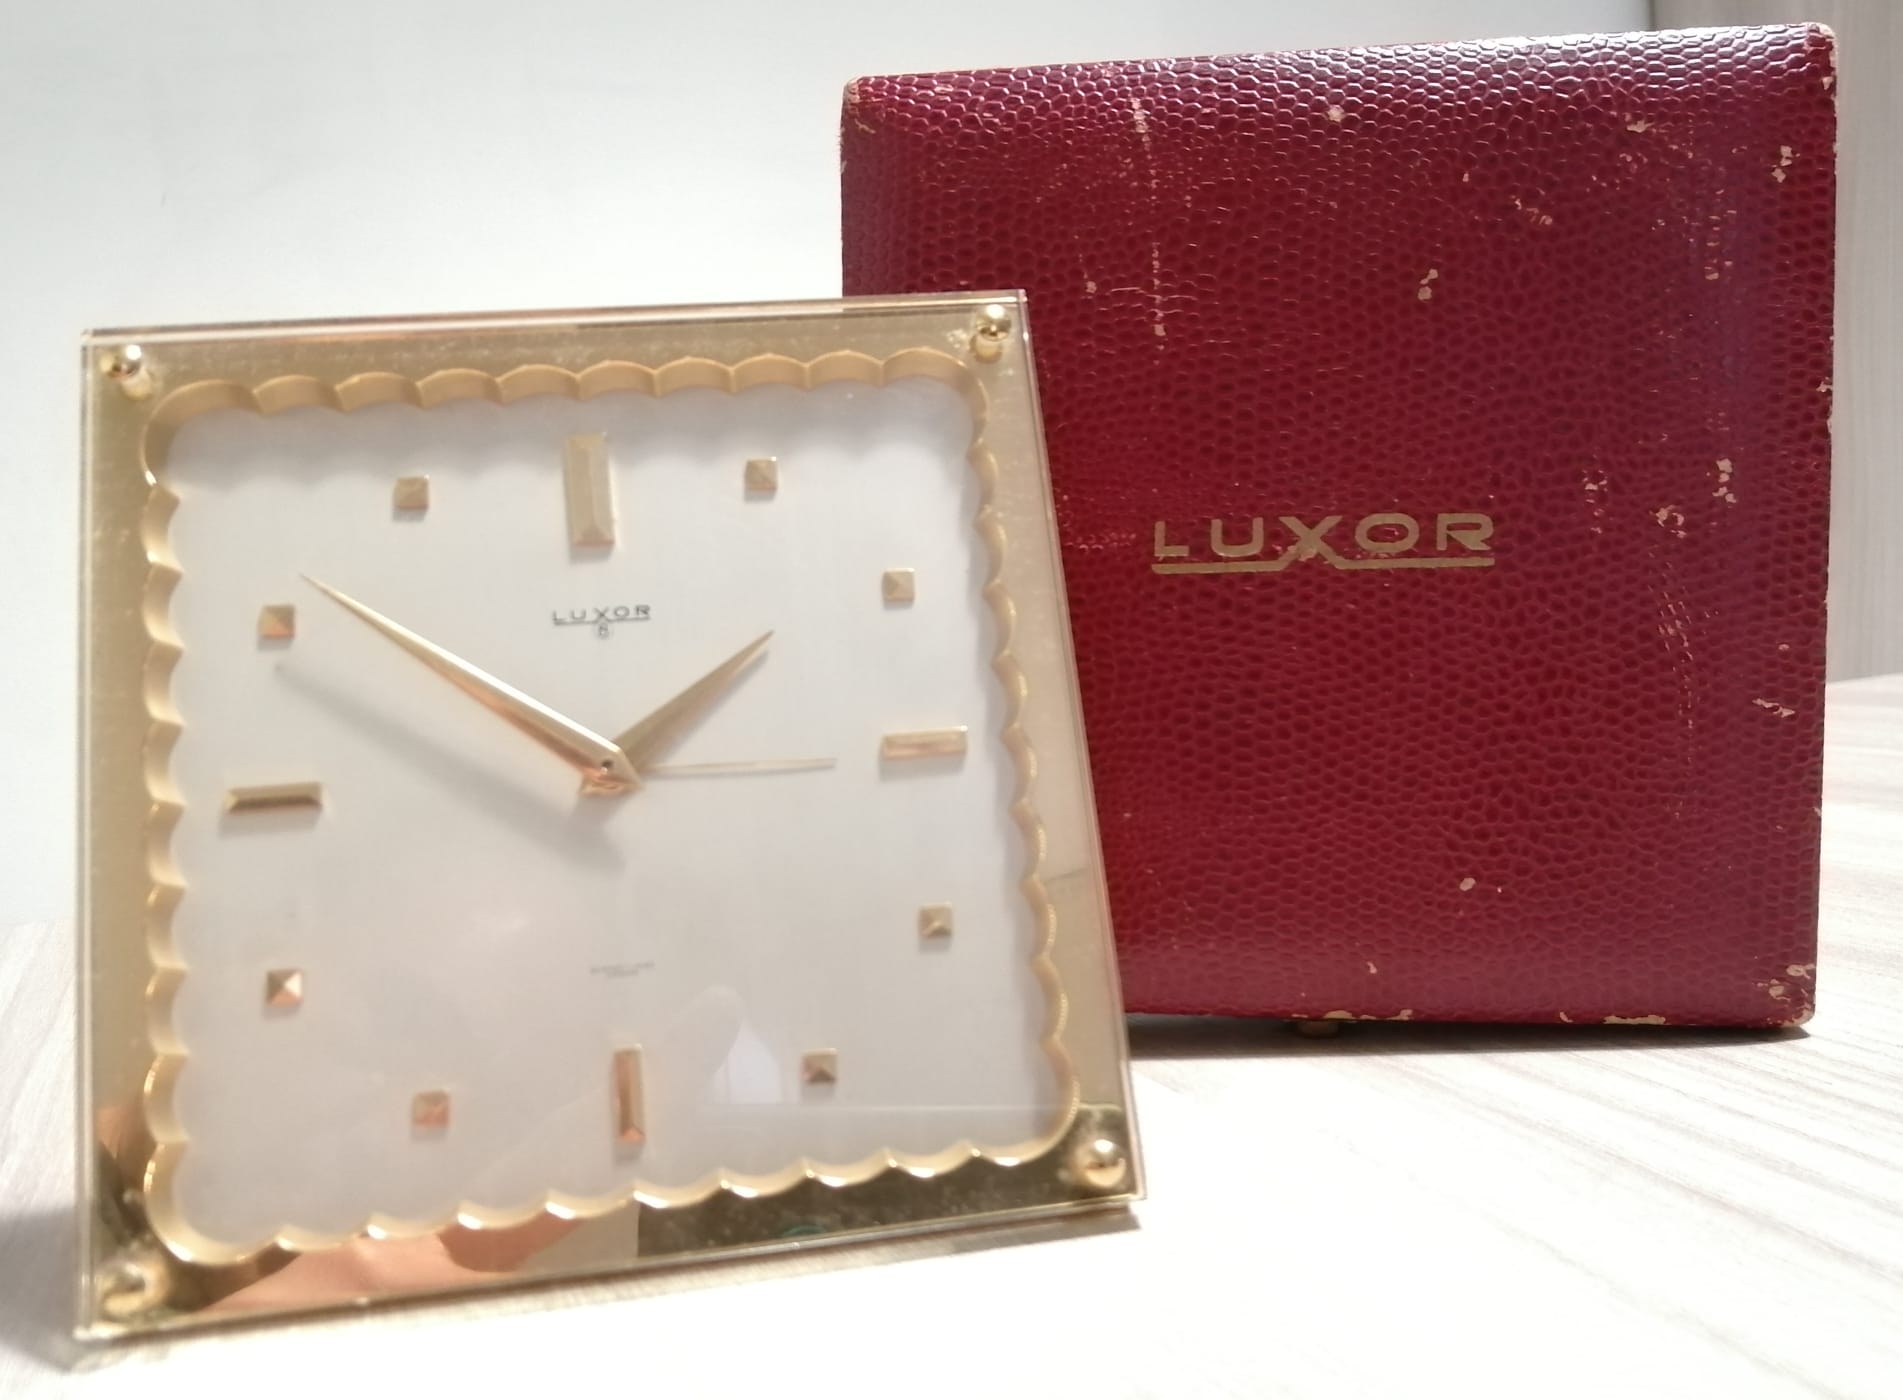 Anonimo Luxor 8 Days reveil clock for retailer Serpico Y Layno mechanical - box - newoldstock condition | San Giorgio a Cremano